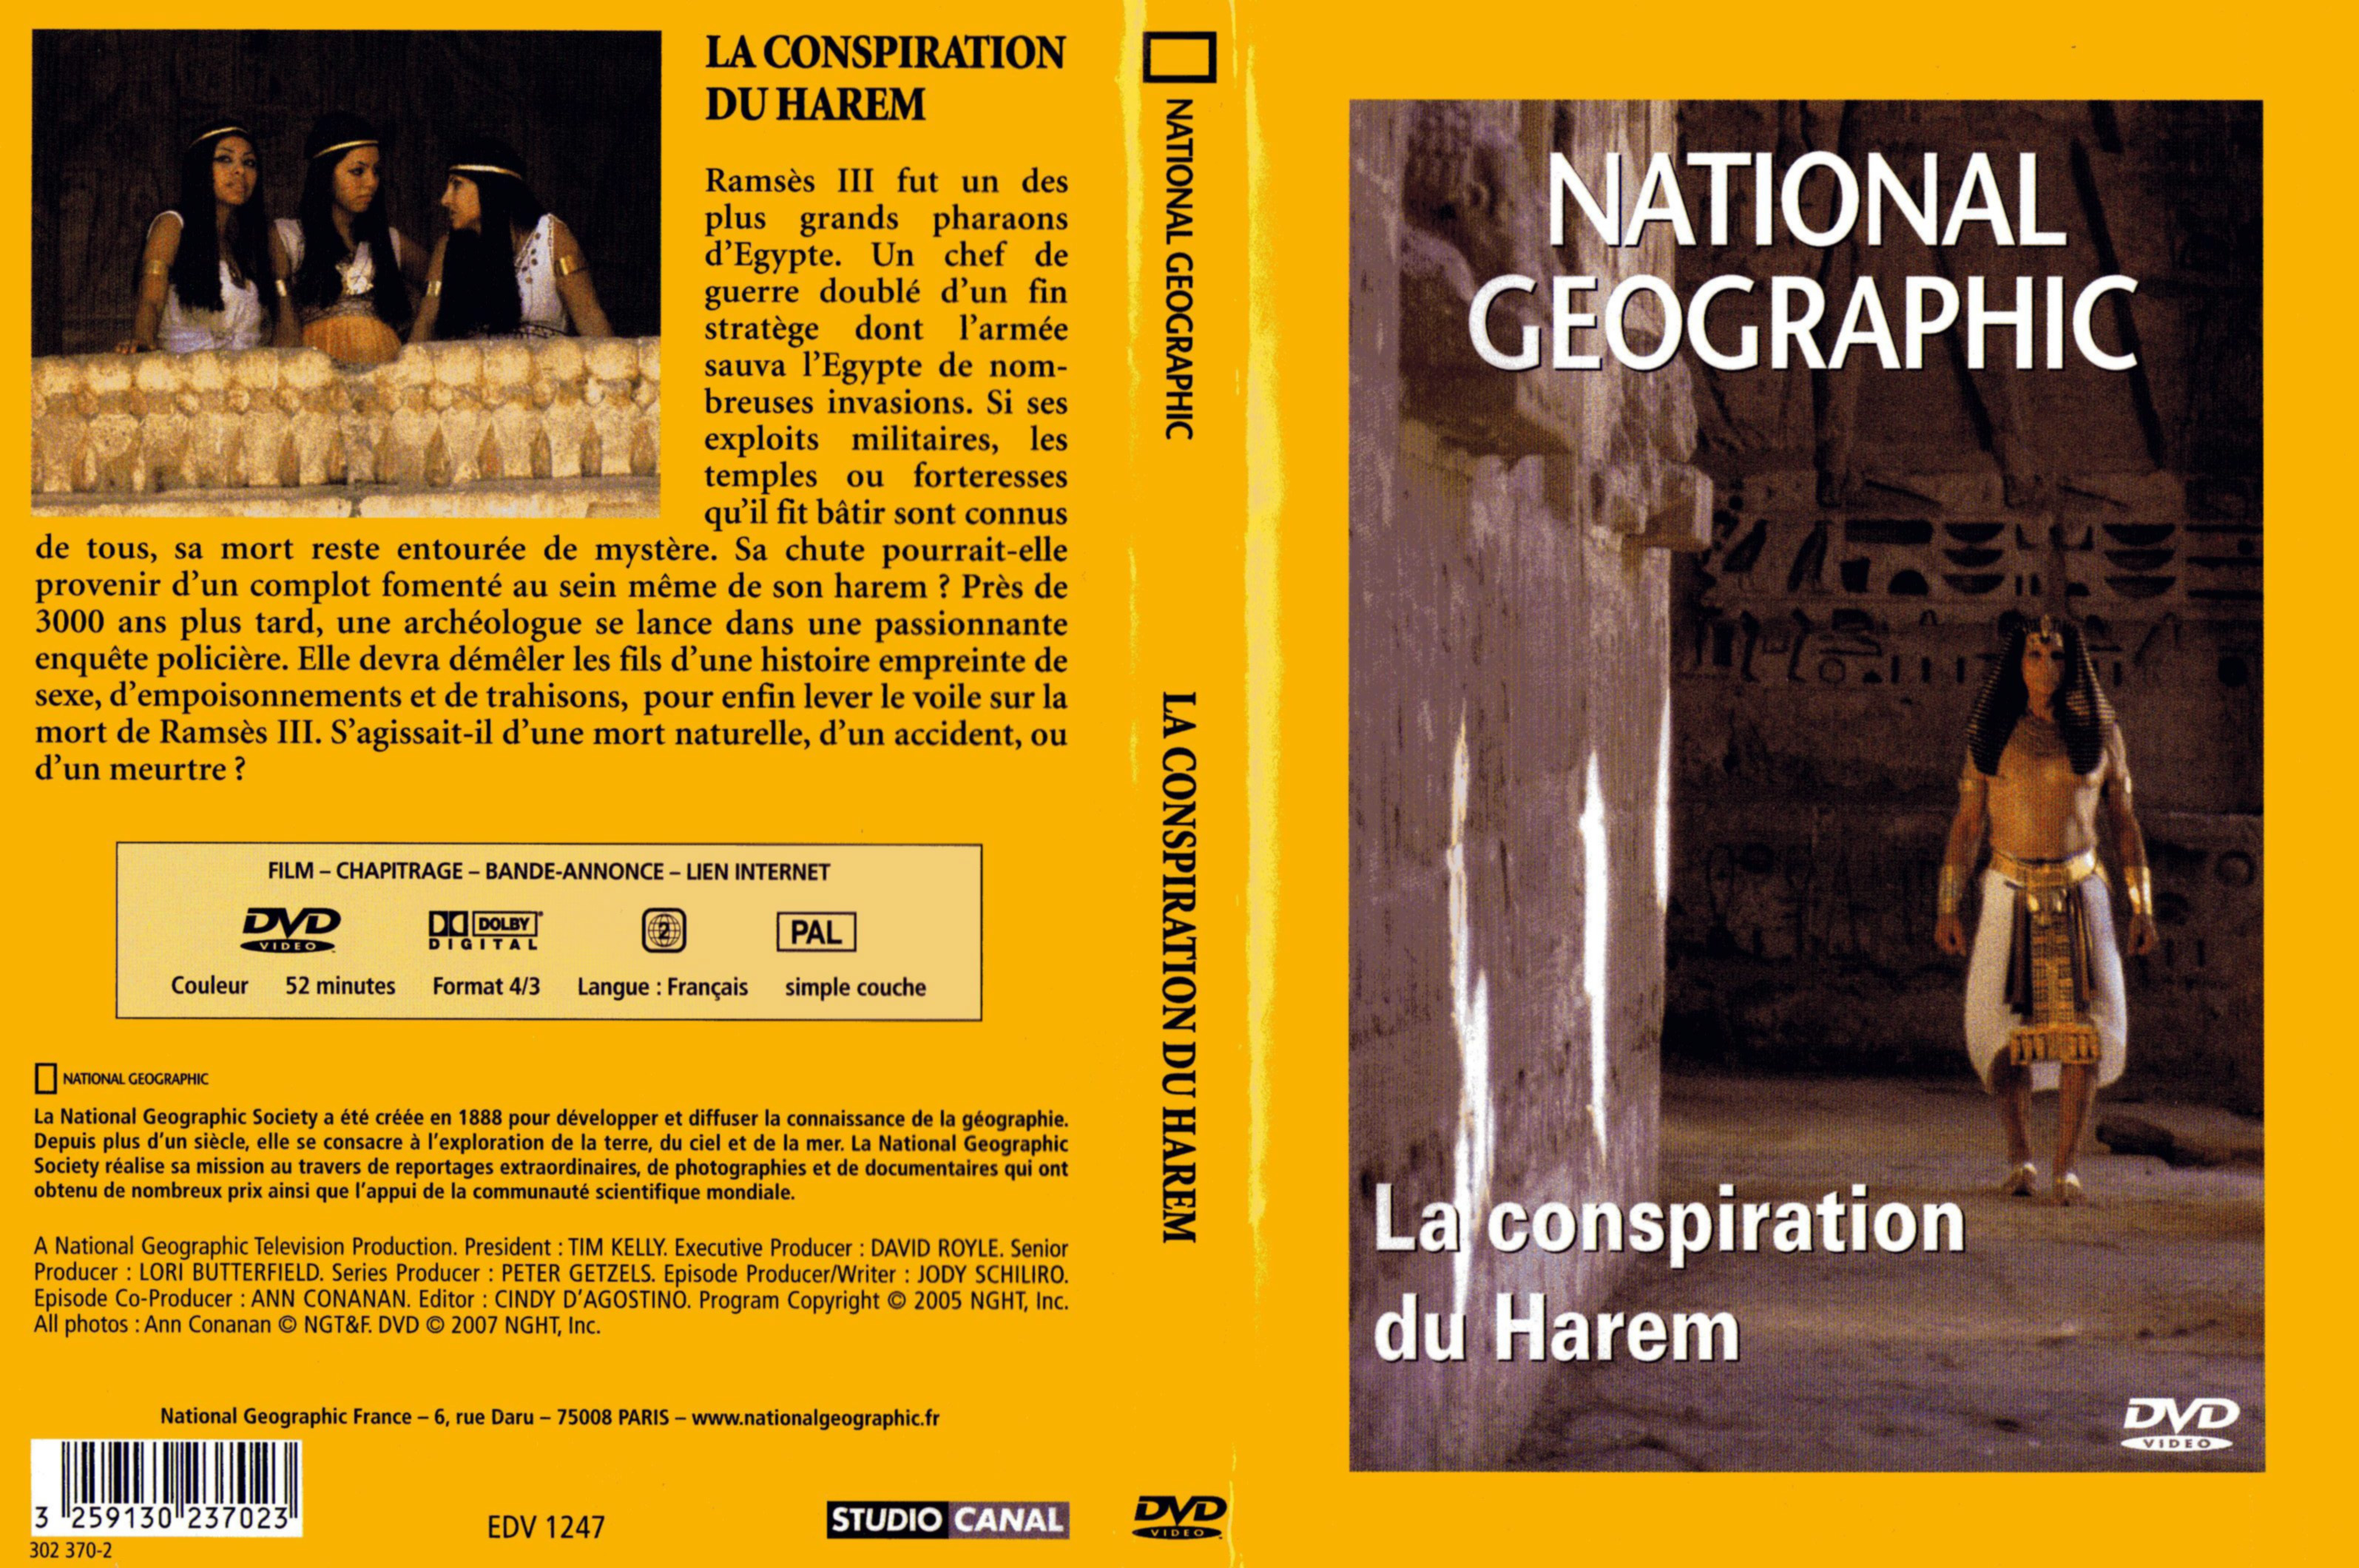 Jaquette DVD National geographic - La conspiration du harem